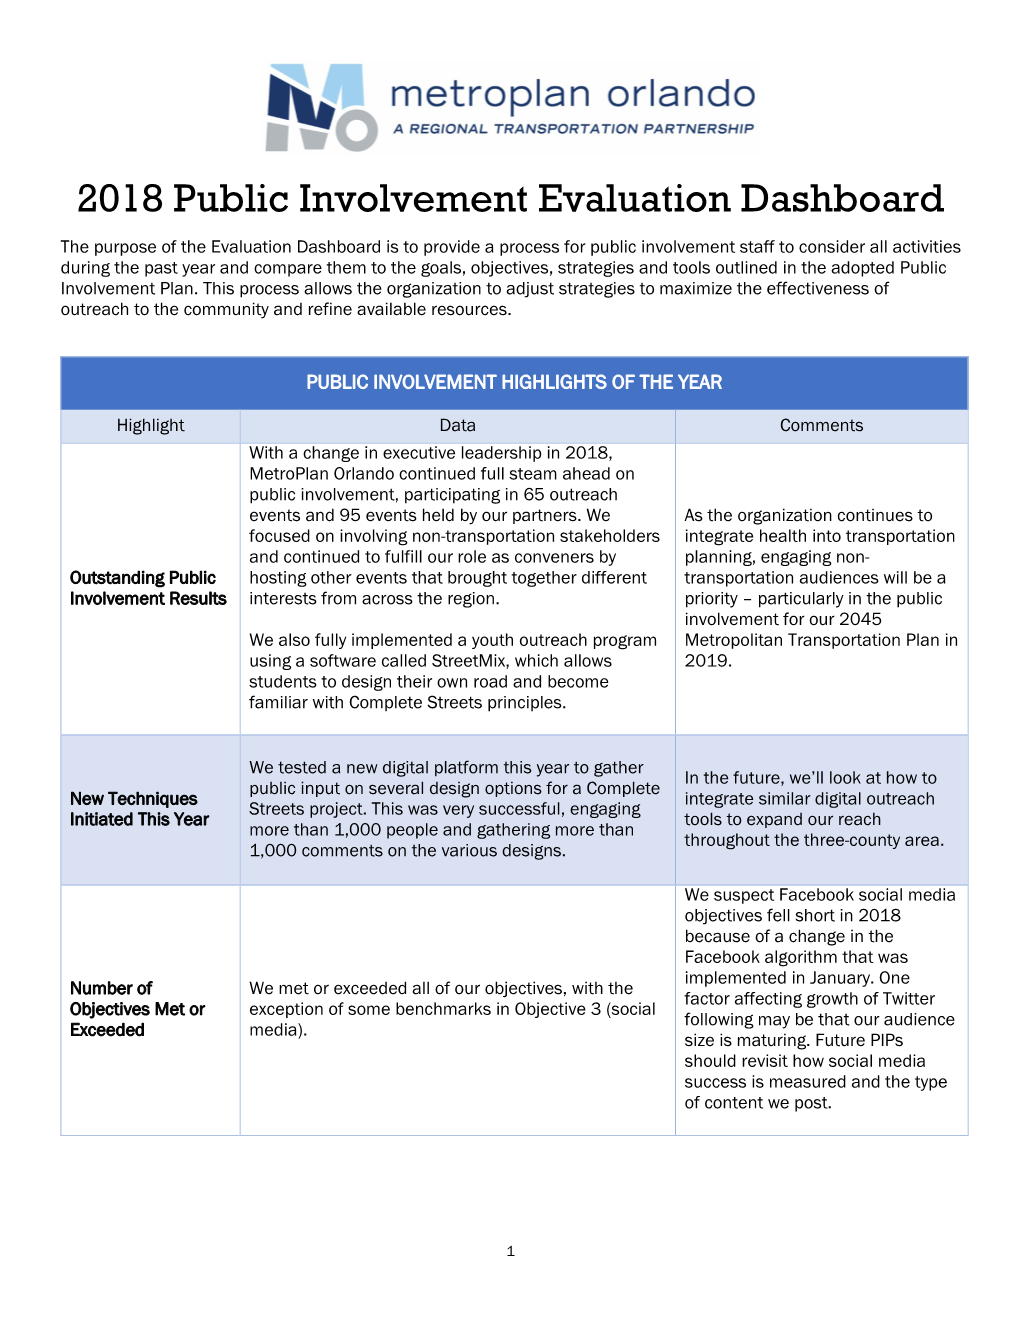 2018 Public Involvement Plan Annual Review